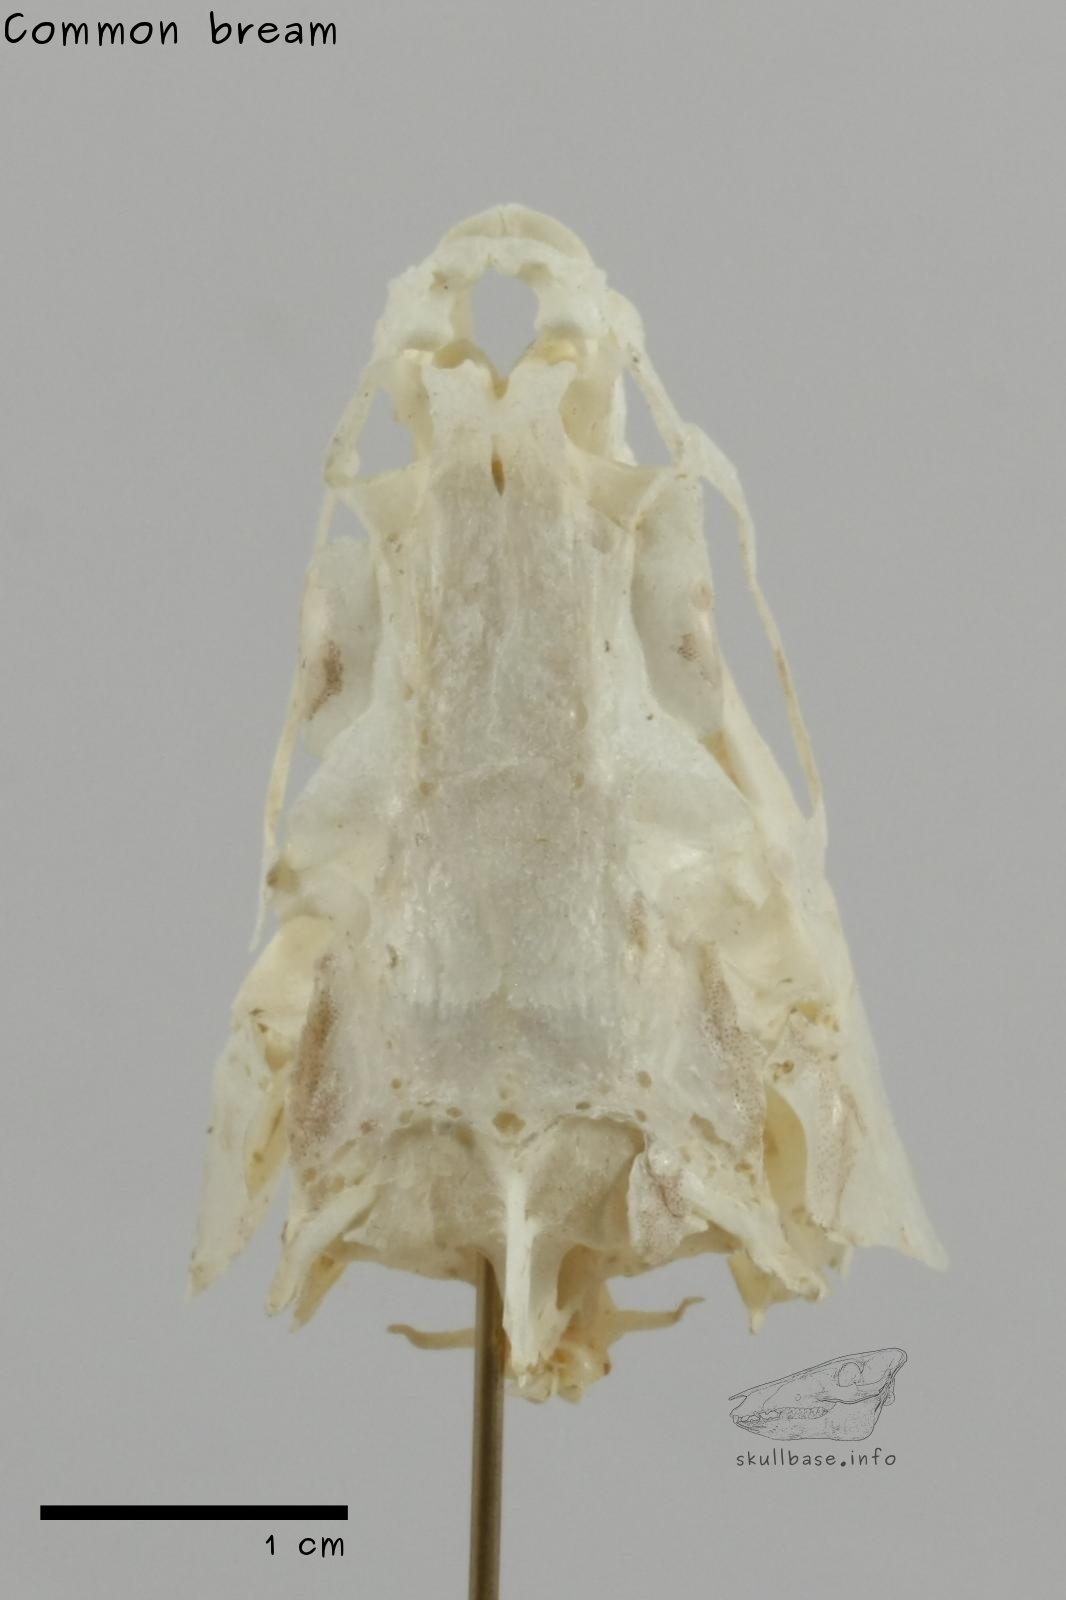 Common bream (Abramis brama) skull dorsal view